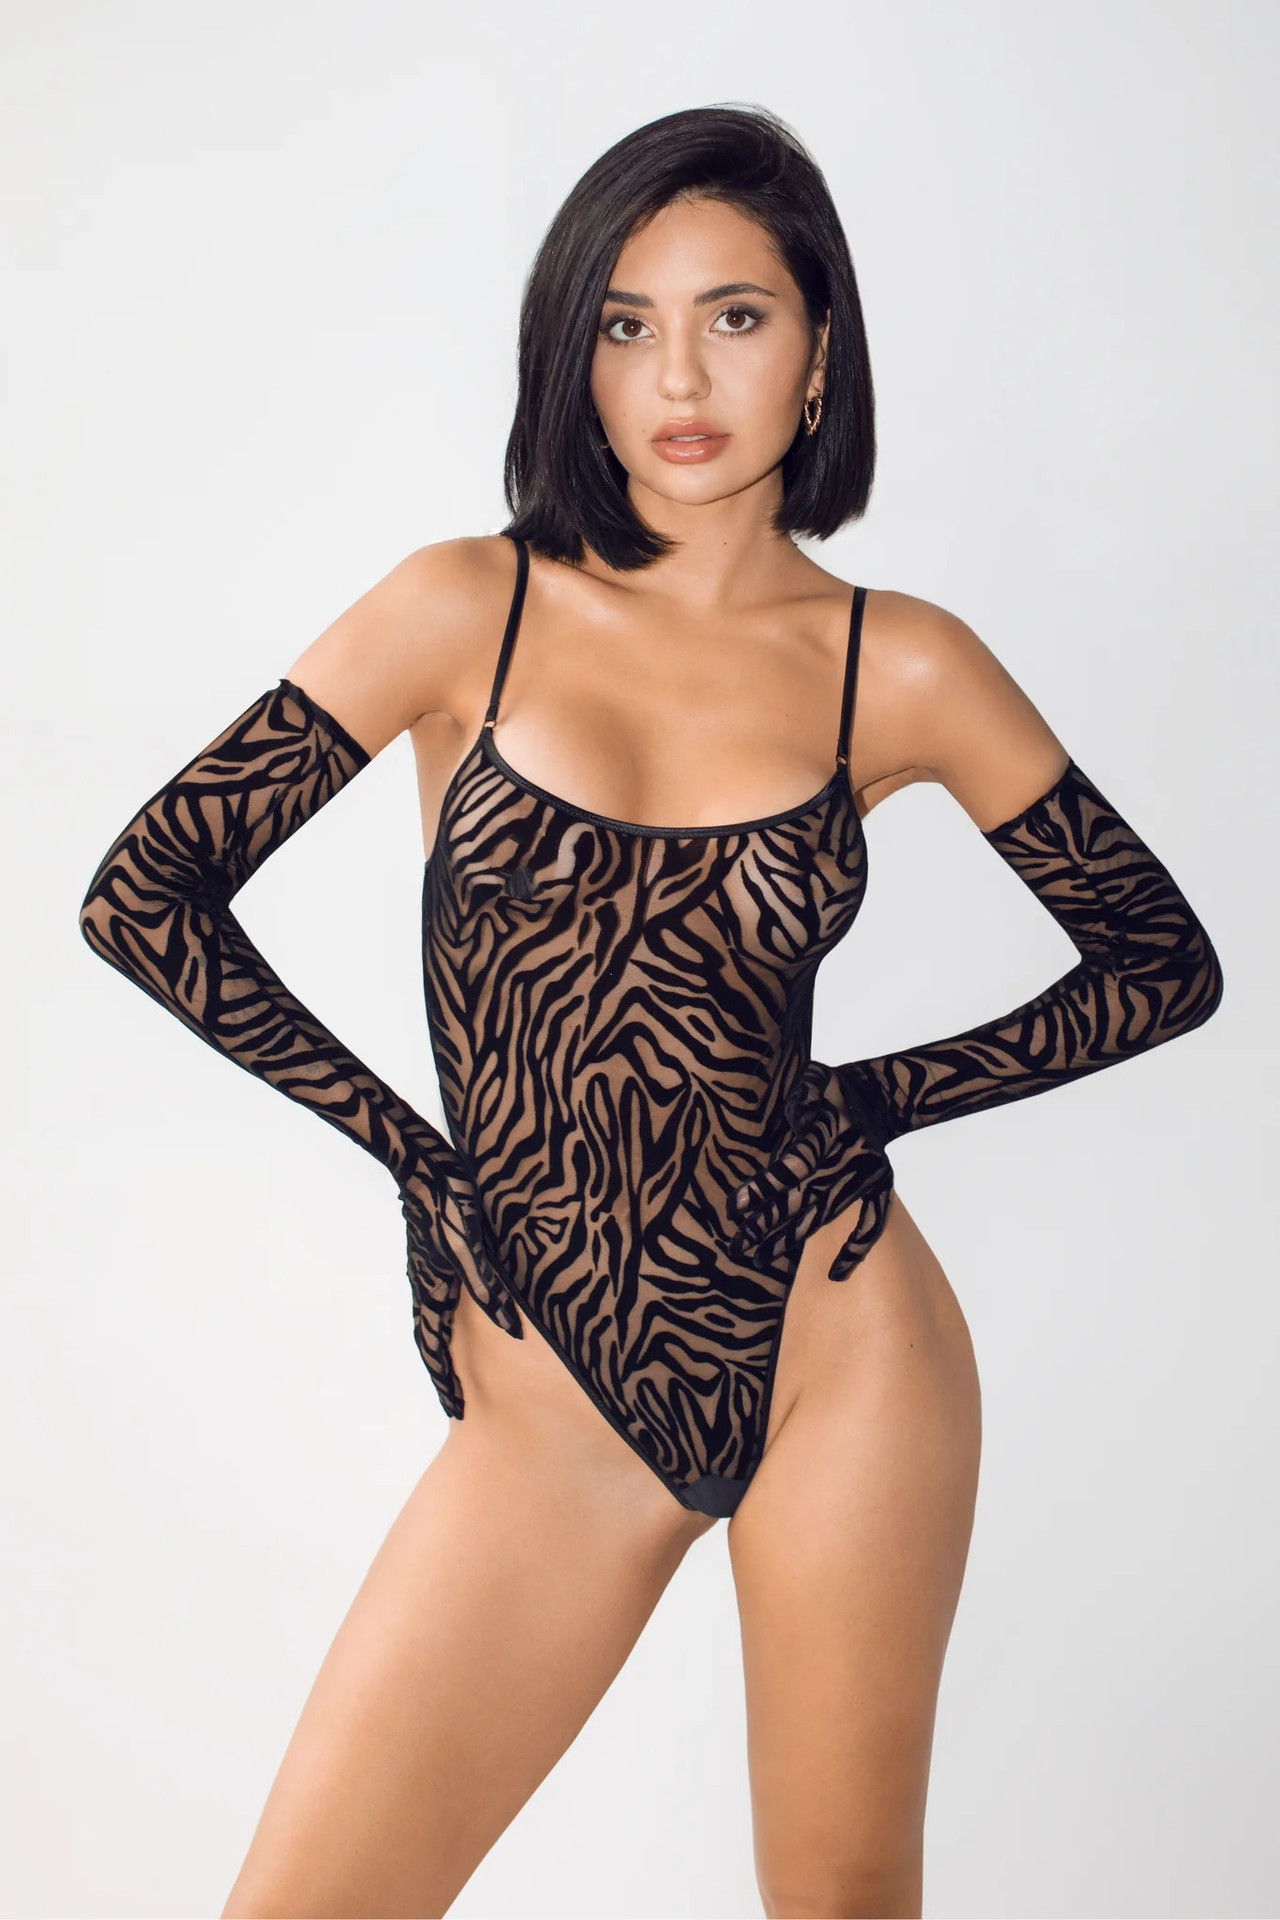 B9013--Sexy sexy jumpsuit without wire rims zebra see-through underwear nightclub hot girl set